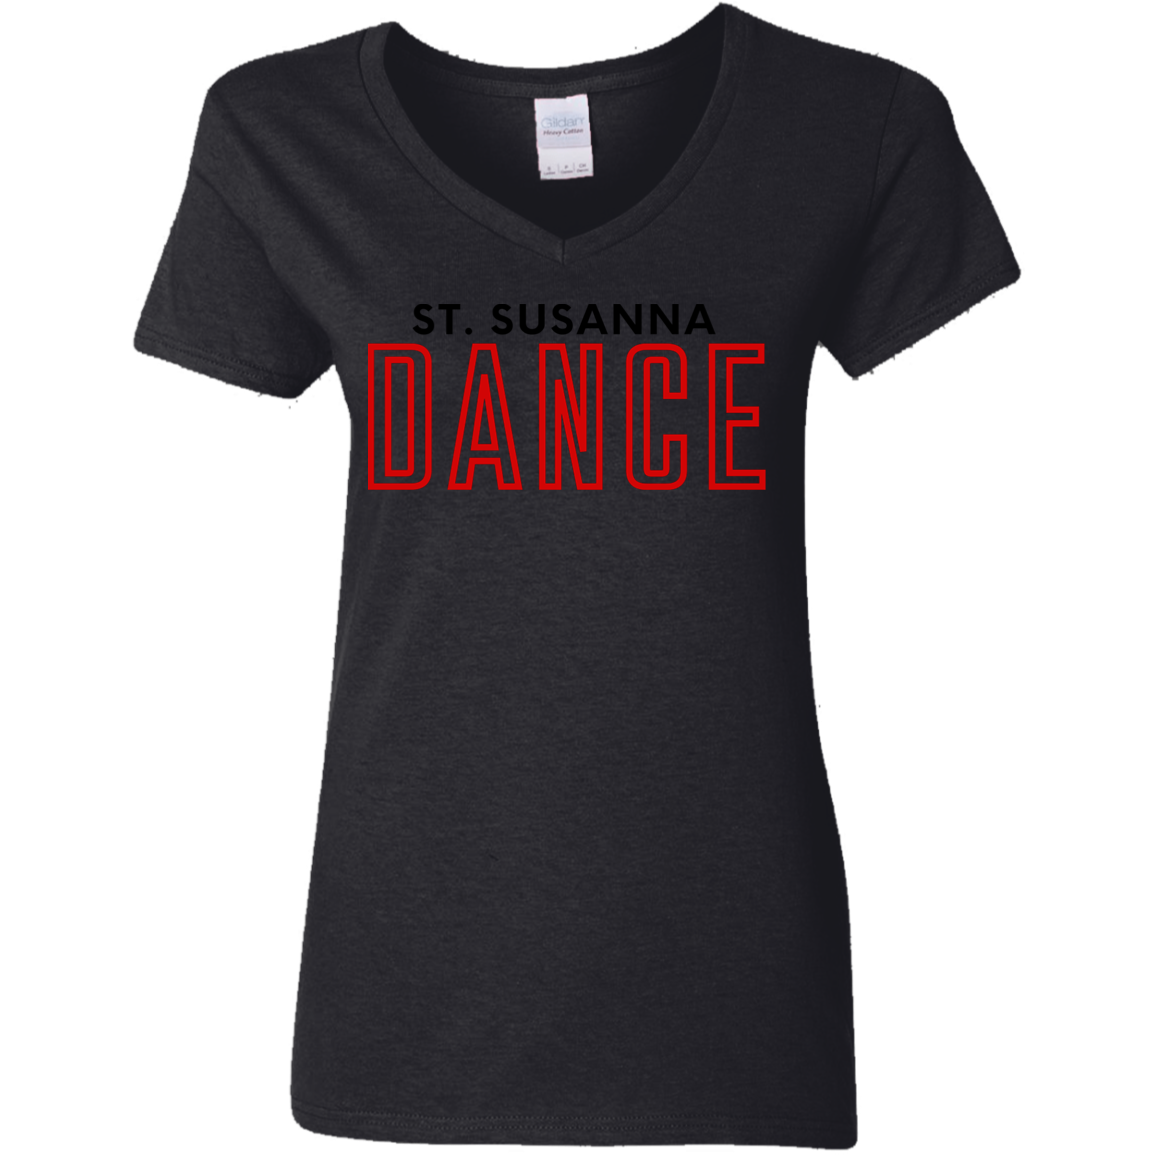 St. Susanna DANCE (Black/Gray) Ladies' 5.3 oz. V-Neck T-Shirt